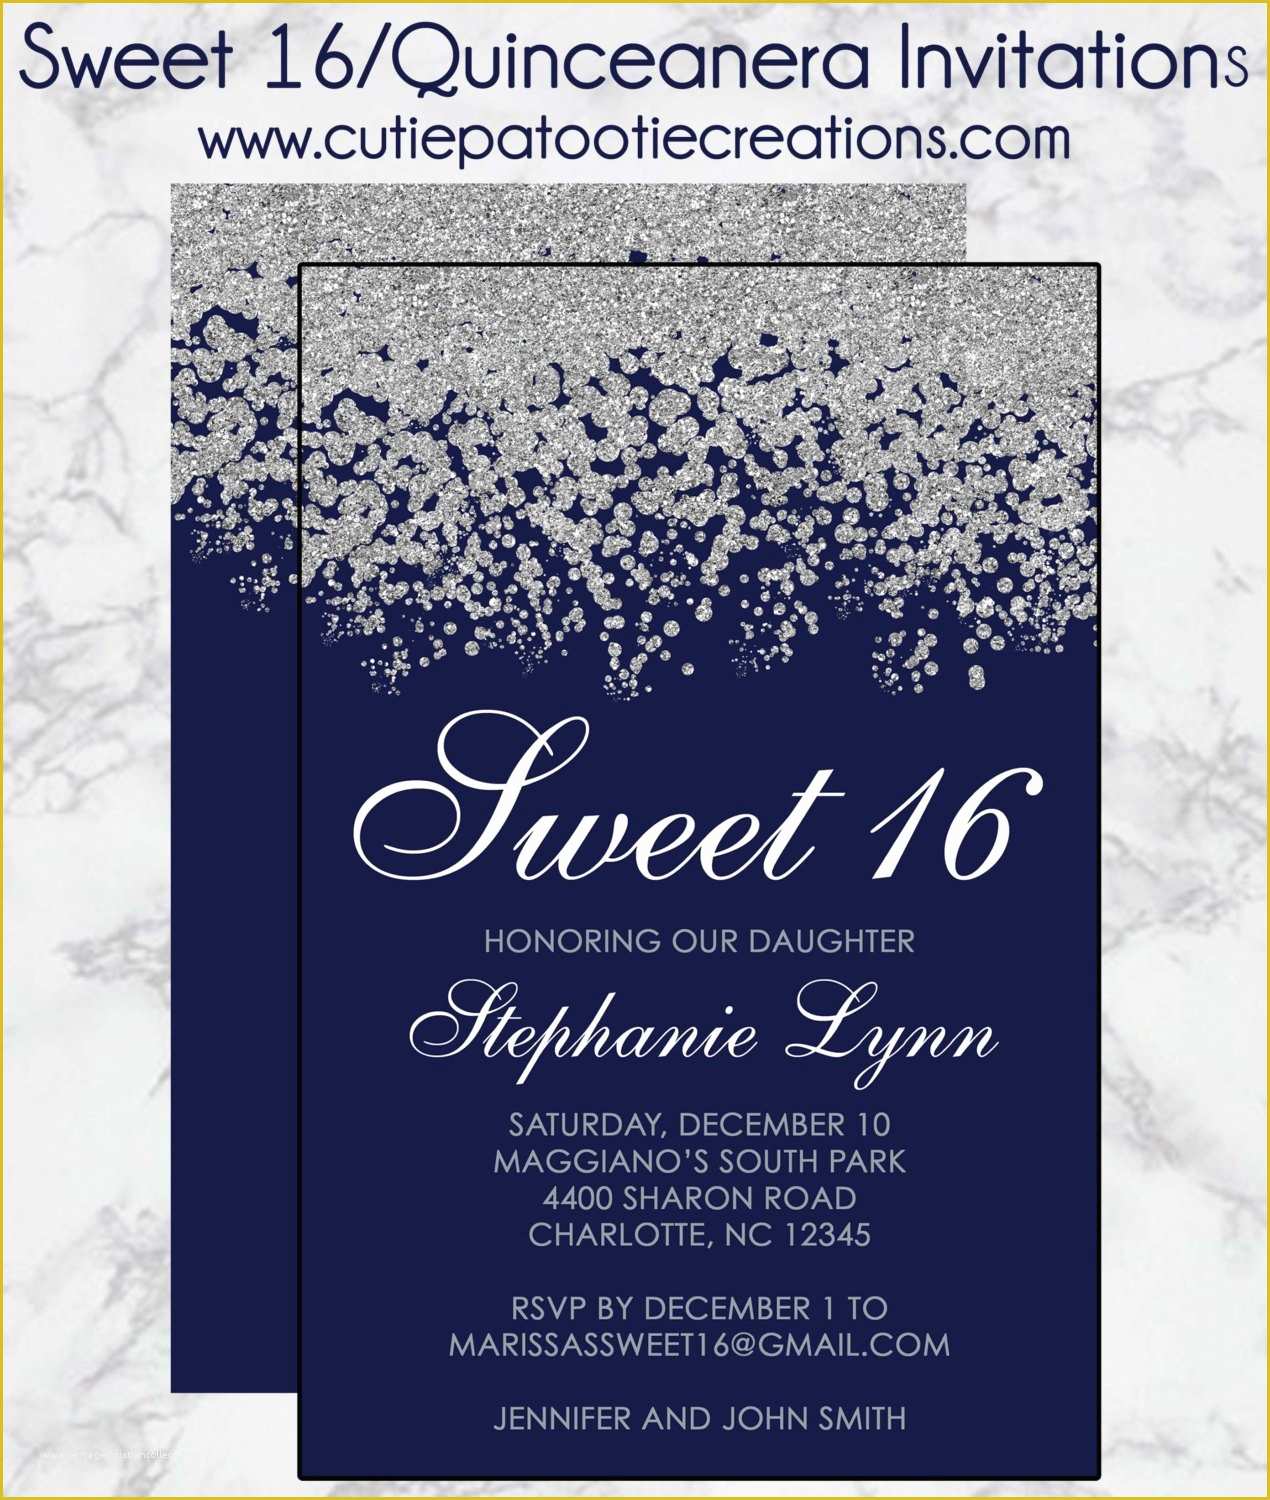 Sweet 16 Invitations Templates Free Of Sweet 16 Birthday Invitations Quinceanera Invitation Navy